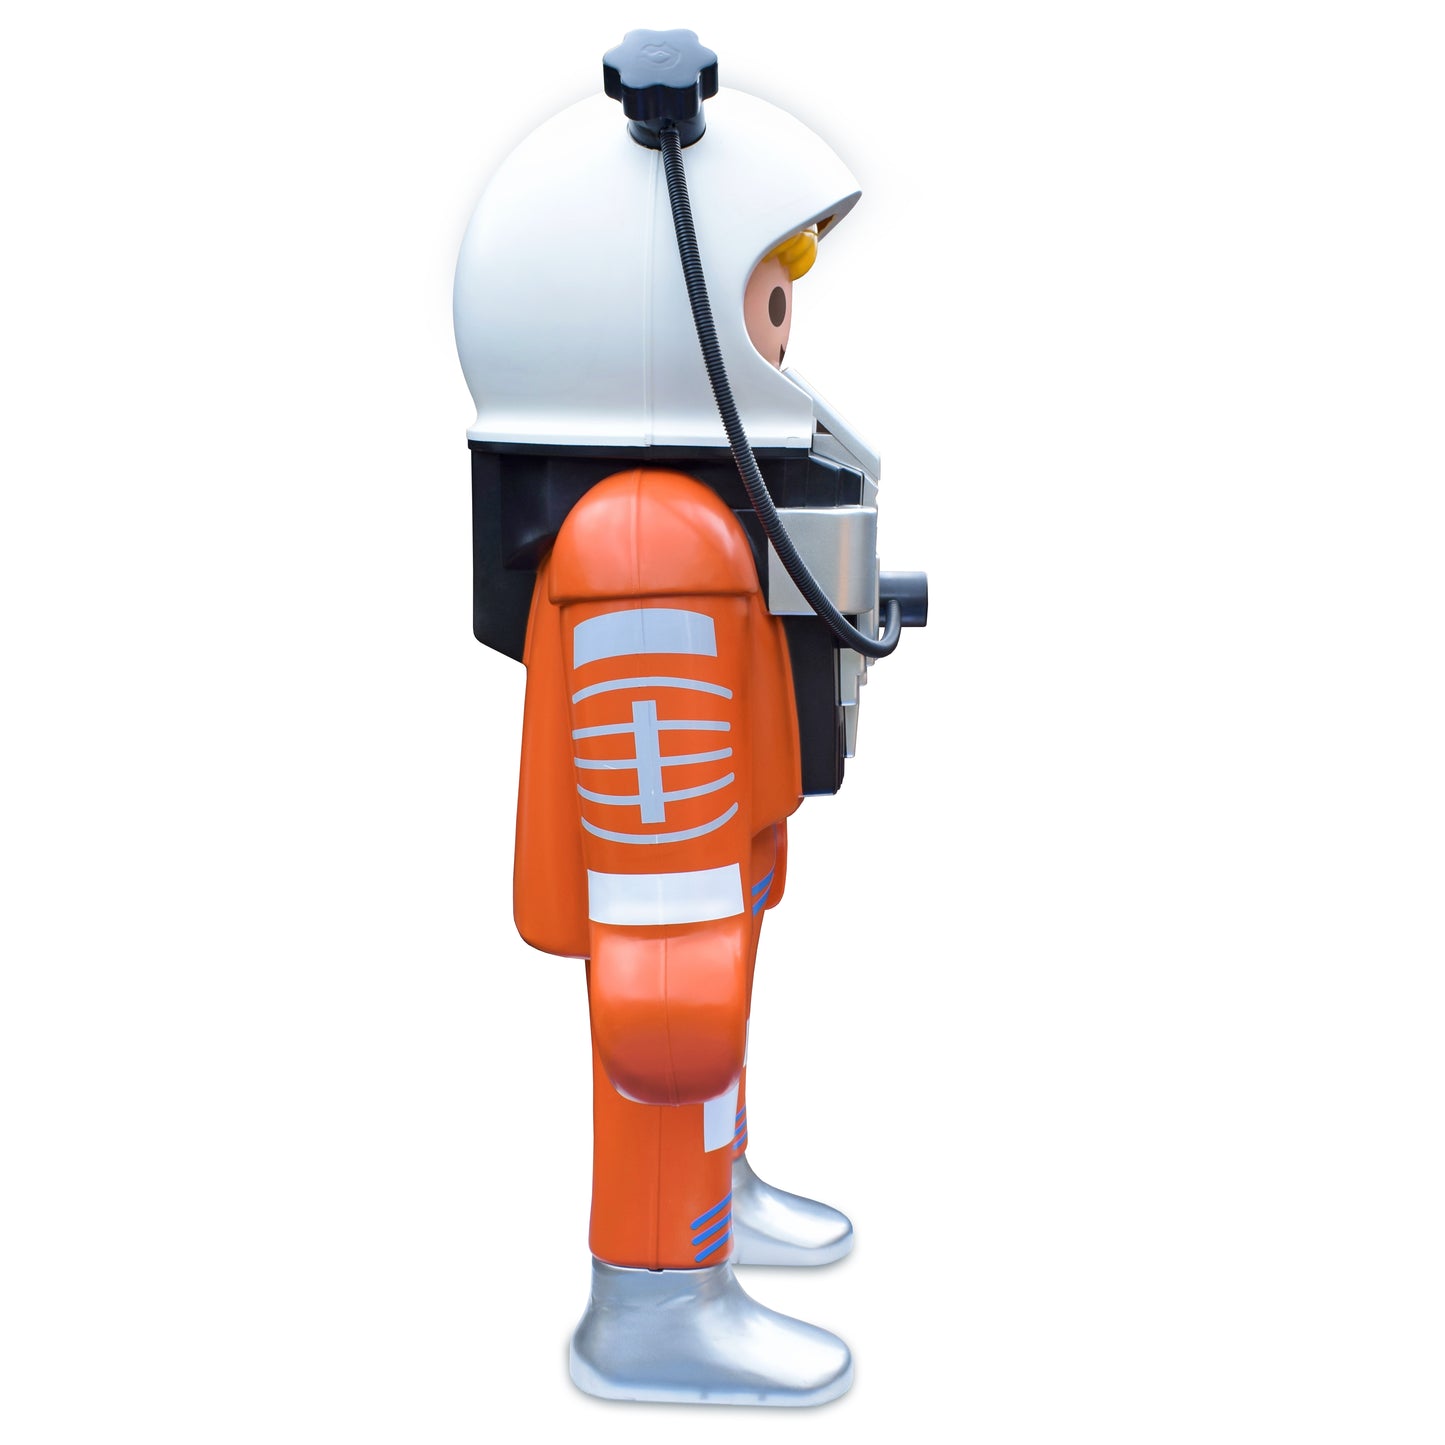 Retro, Kitsch Giant Playmobil Spaceman Shop Retail Figure - 5ft Height